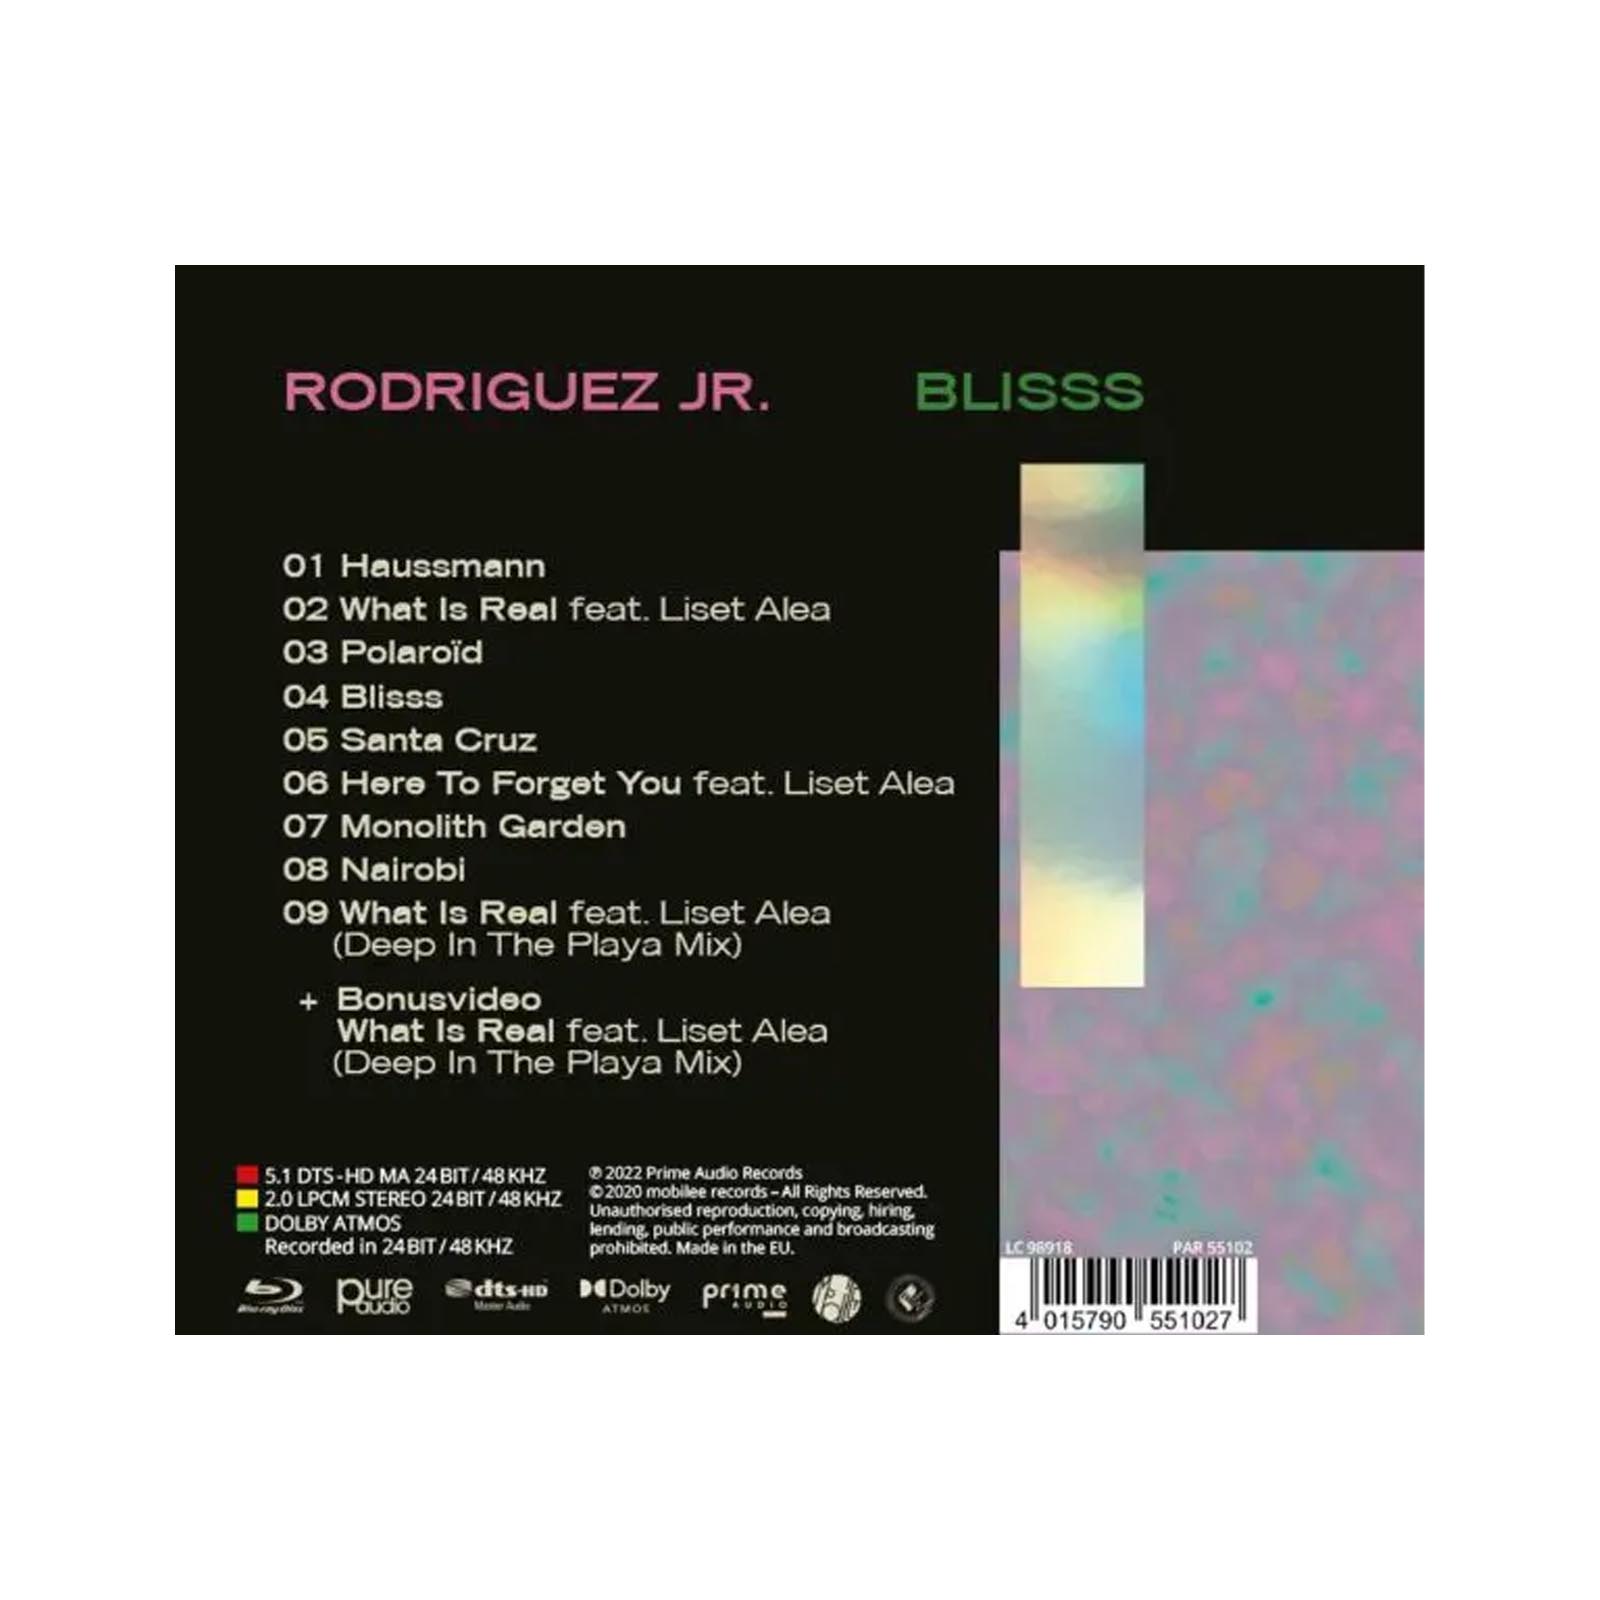 Rodriguez Jr. – BLISSS (Edizione Dolby Atmos) (2)